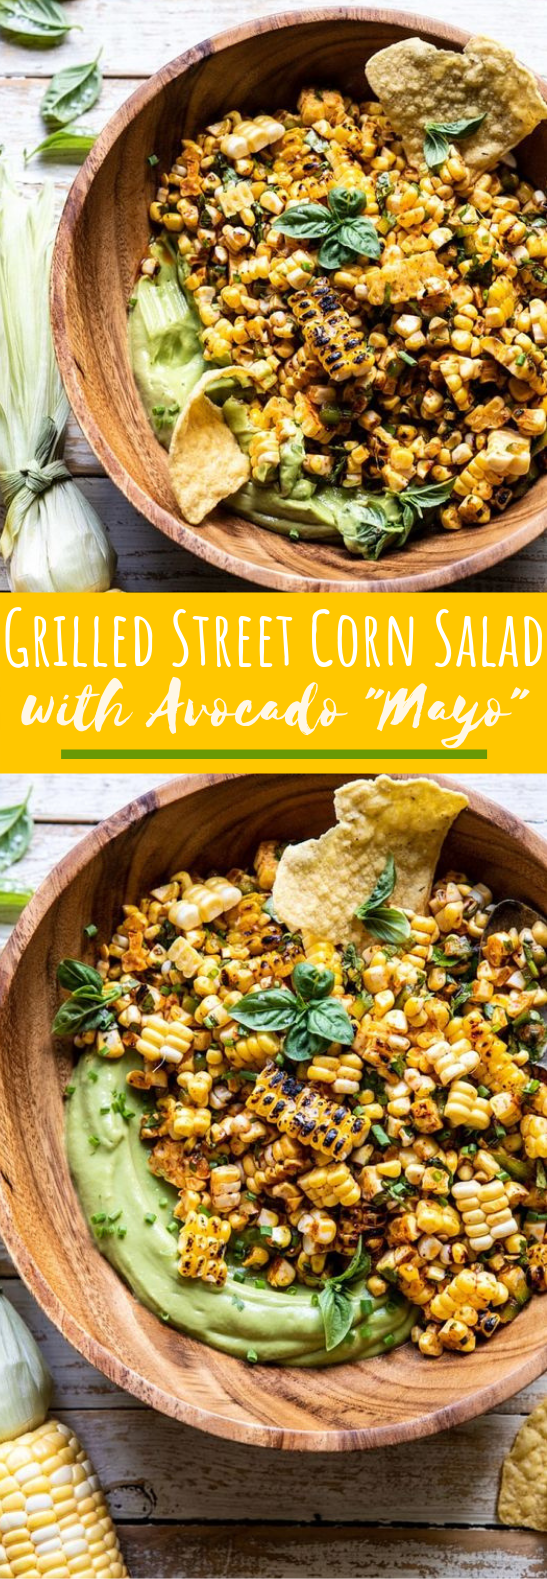 Grilled Street Corn Salad with Avocado “Mayo” #vegan #salad